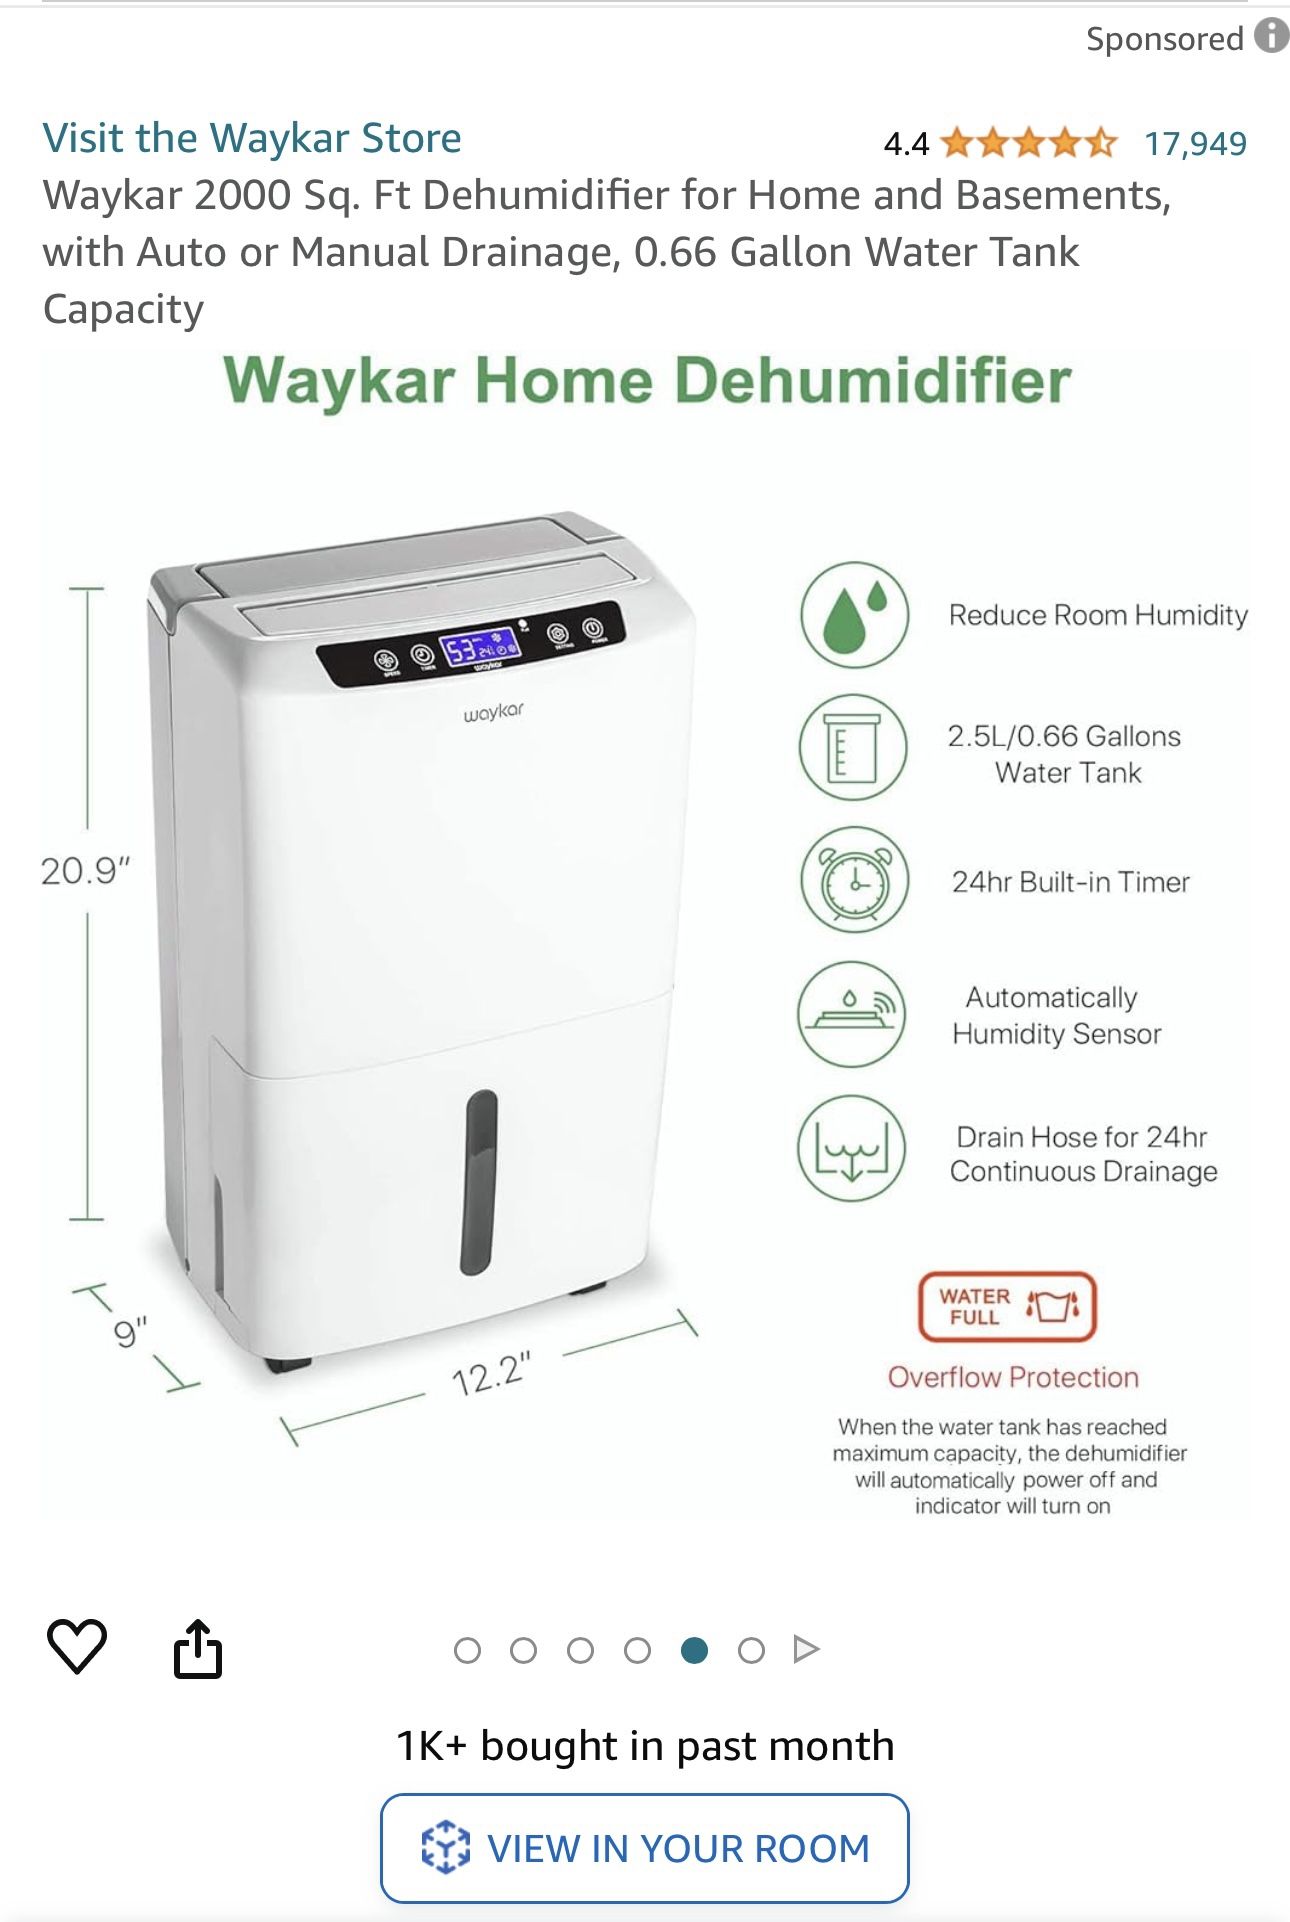 Home dehumidifier used